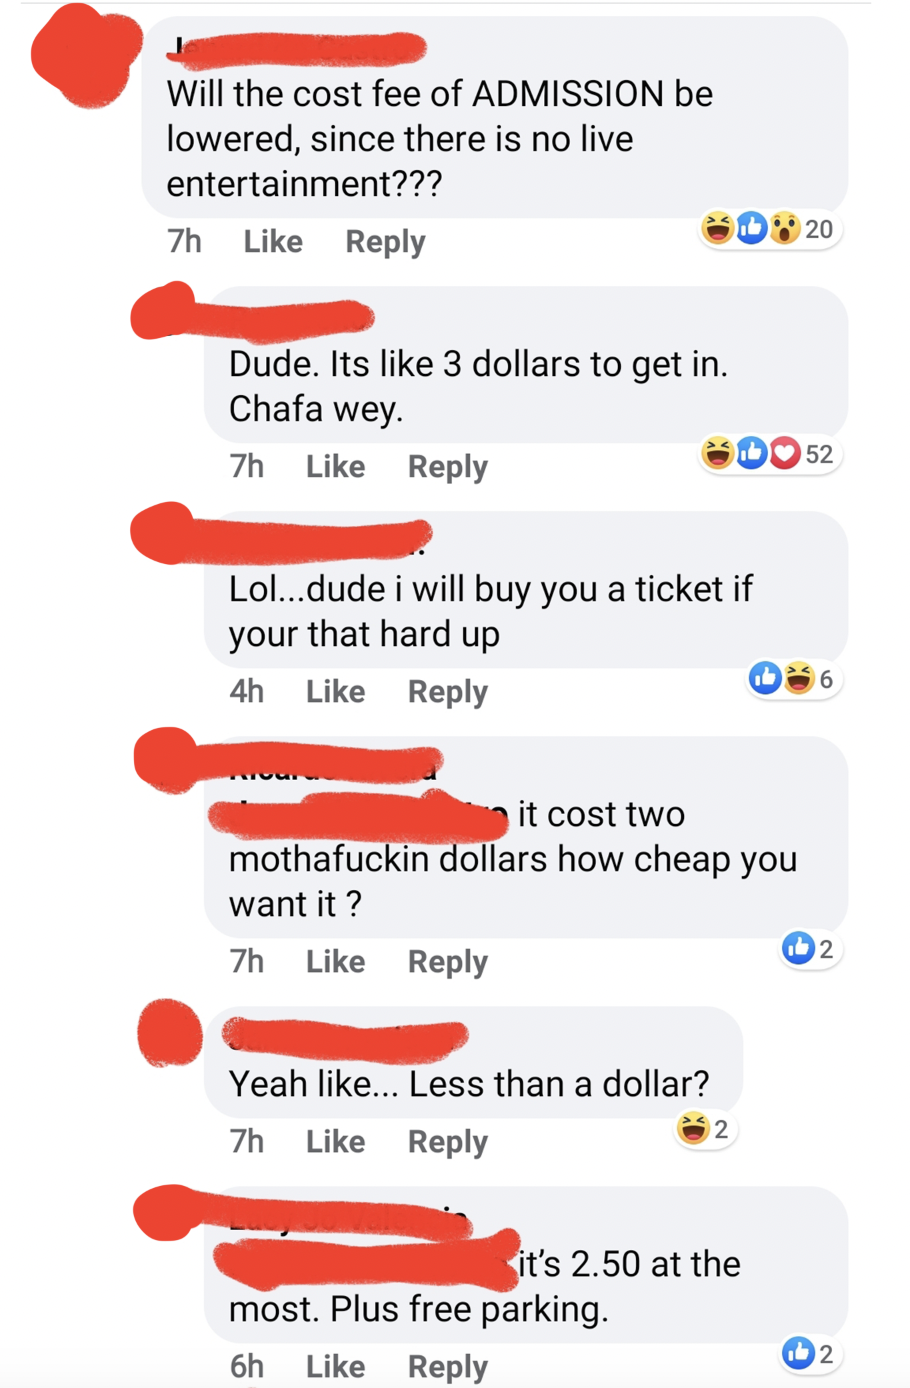 &quot;less than a dollar?&quot;